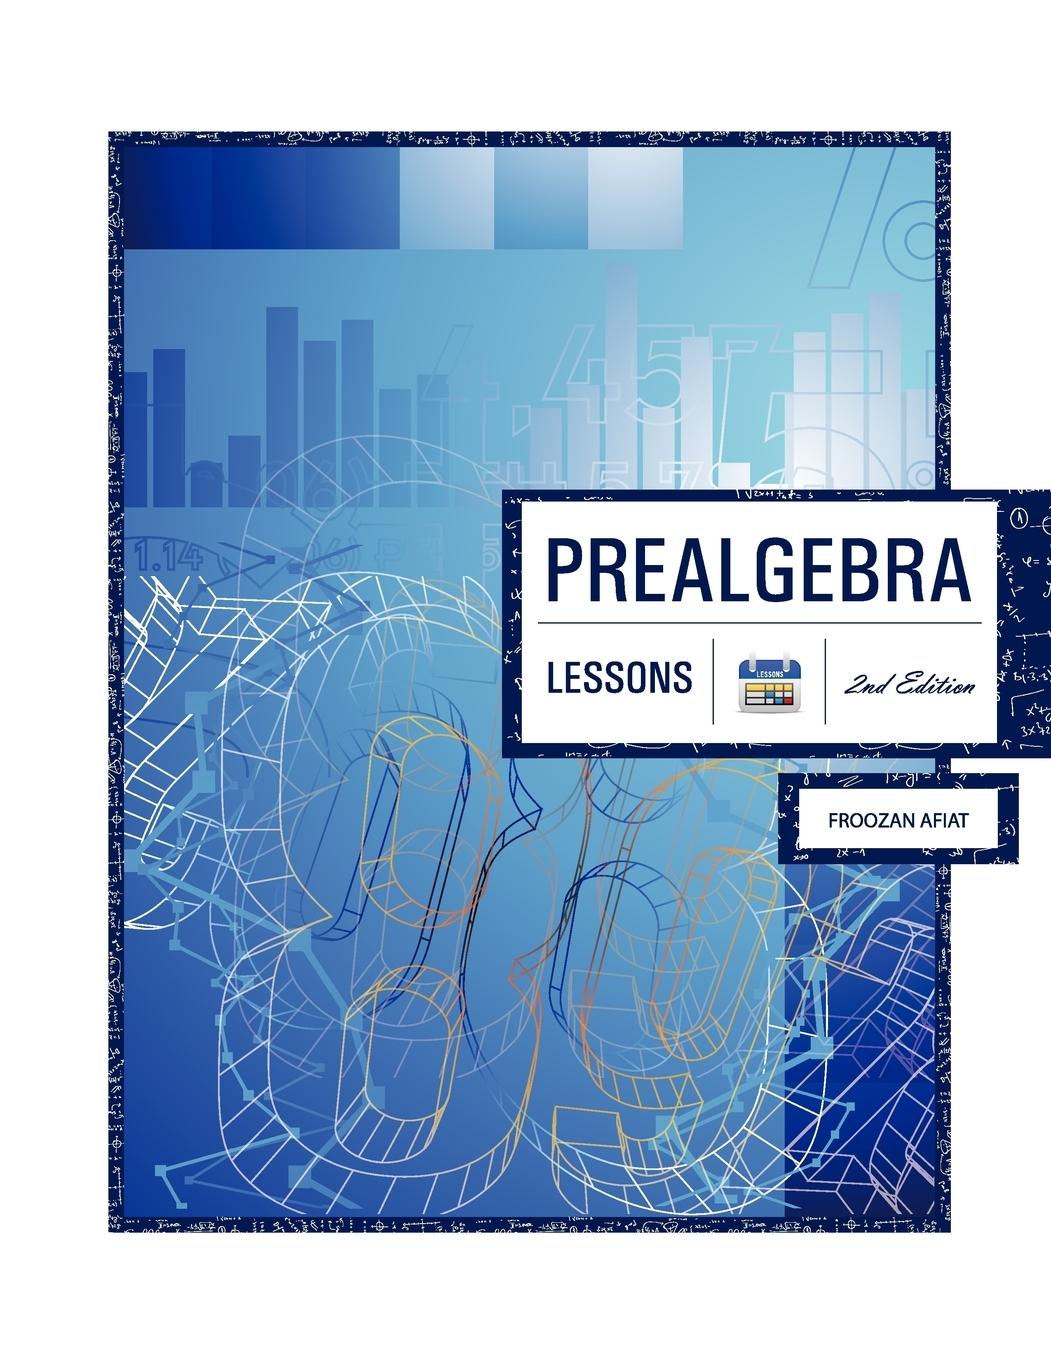 Prealgebra 2nd Edition - Afiat, Froozan